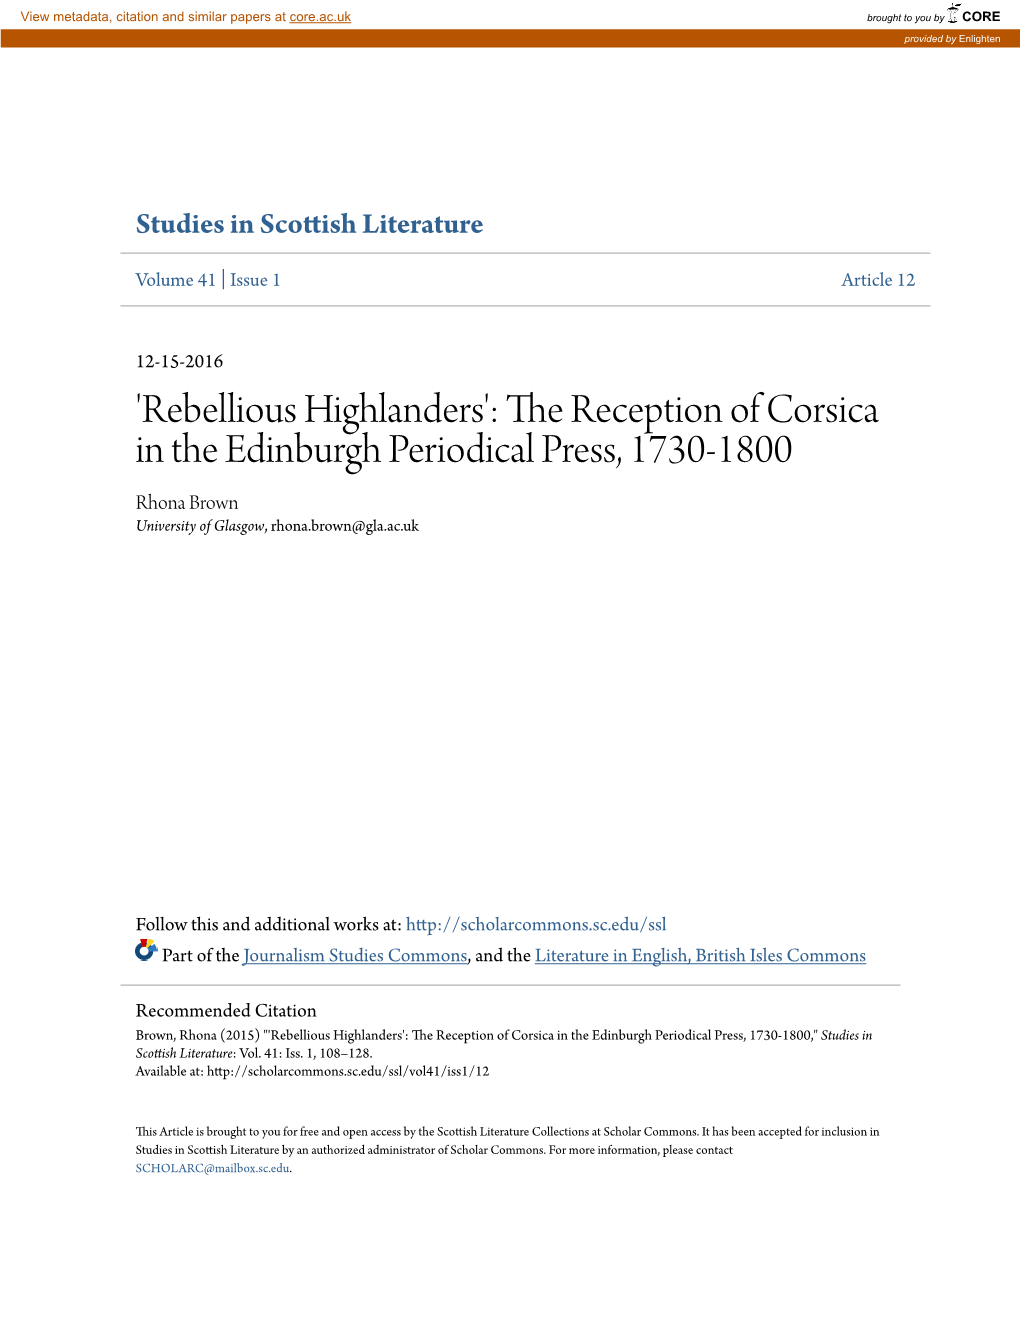 'Rebellious Highlanders': the Reception of Corsica in the Edinburgh Periodical Press, 1730-1800 Rhona Brown University of Glasgow, Rhona.Brown@Gla.Ac.Uk